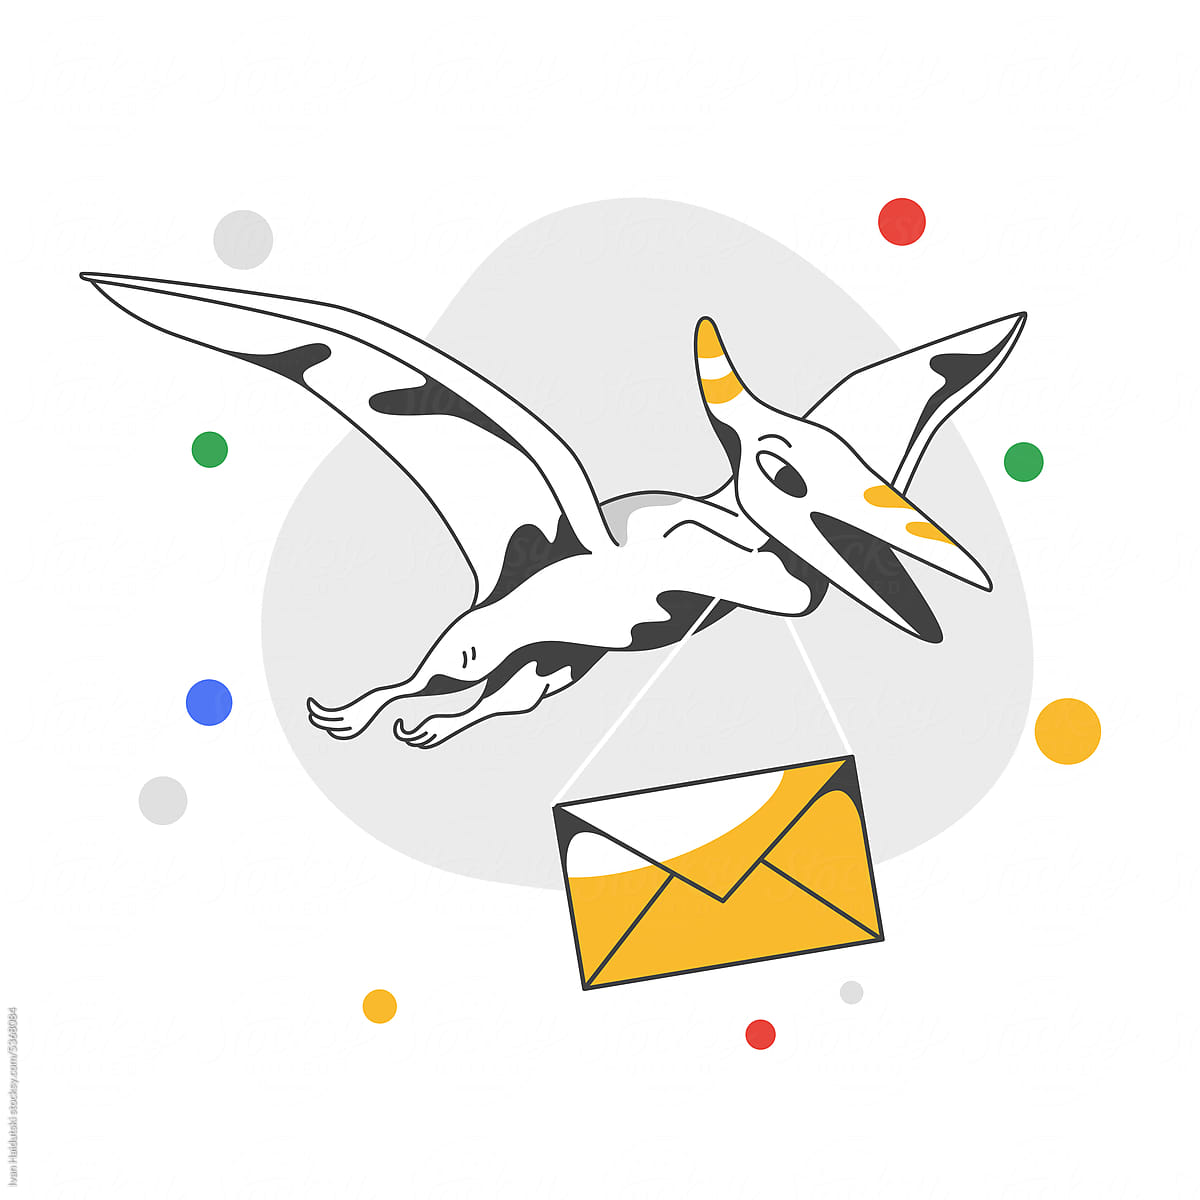 Pterosaur delivering mail post. Concept illustrations of messages.